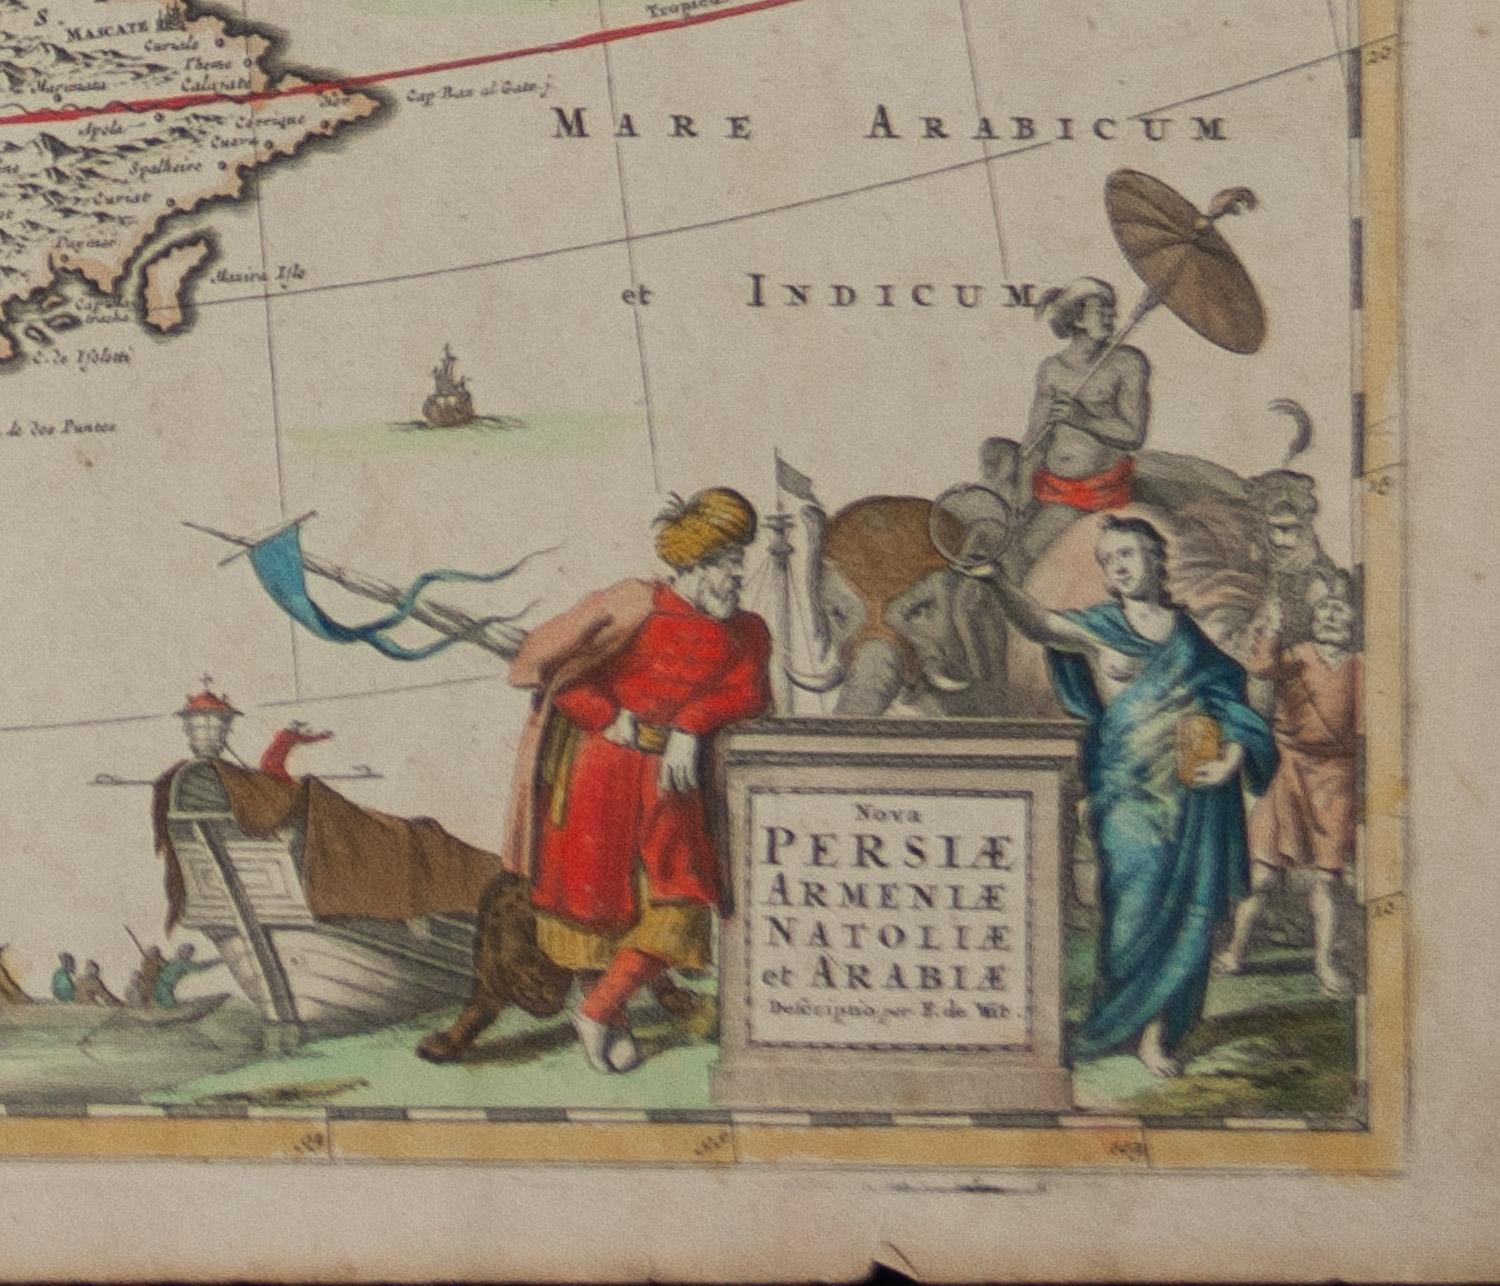  Persiae, Armeniae, Natoliae et Arabiae Descriptio per Frederick deWit 1666 map - Print by Frederick DeWit